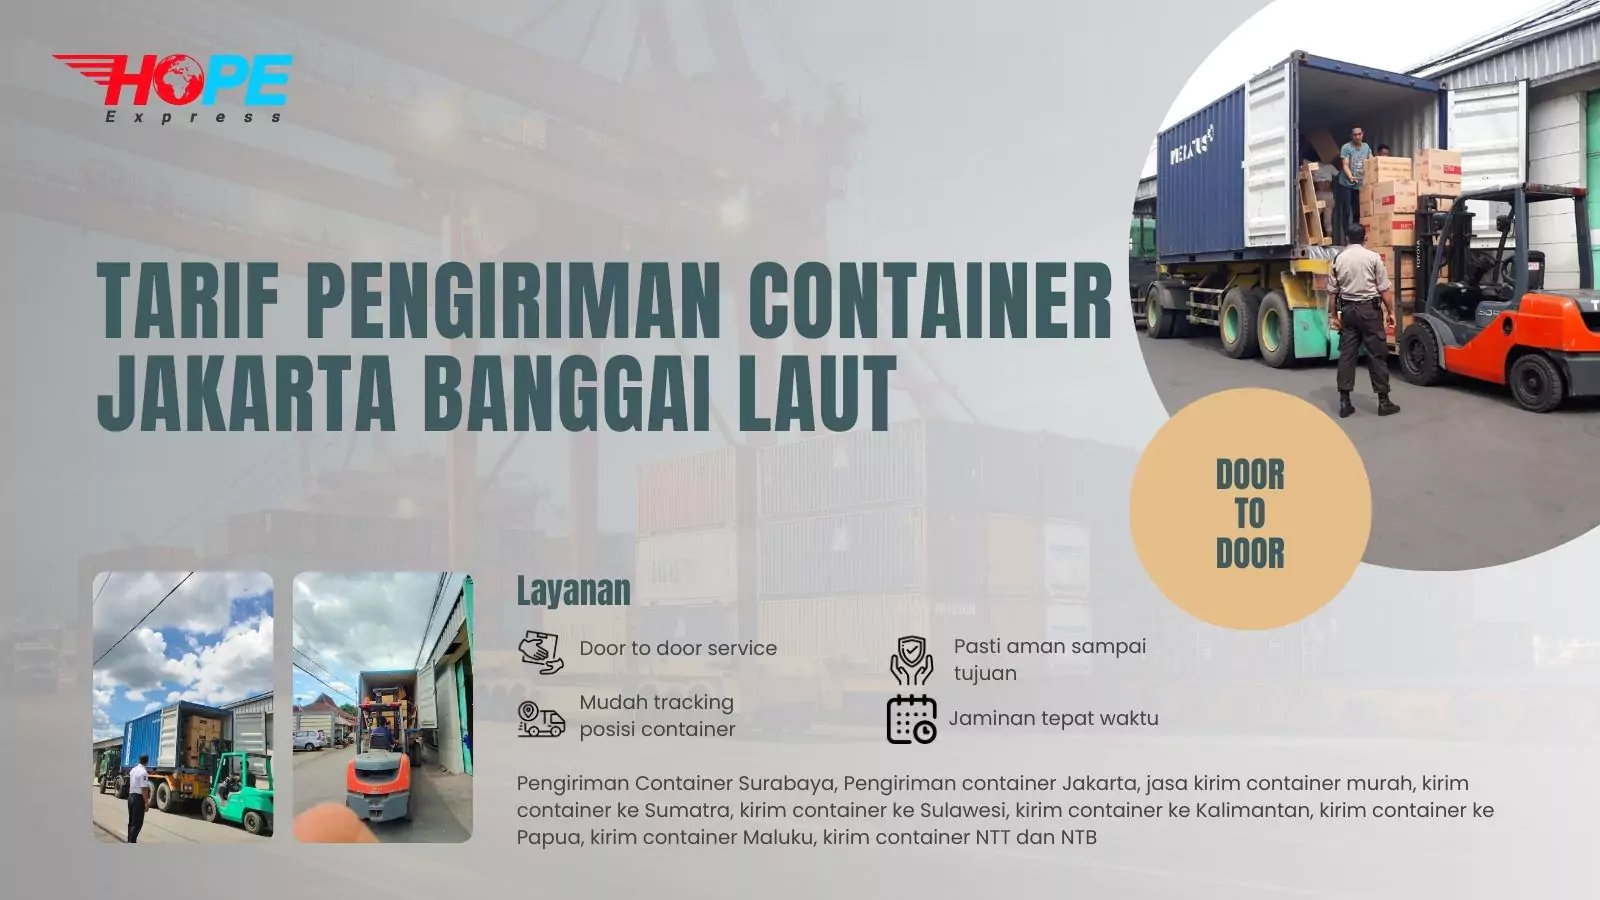 Tarif Pengiriman Container Jakarta Banggai Laut